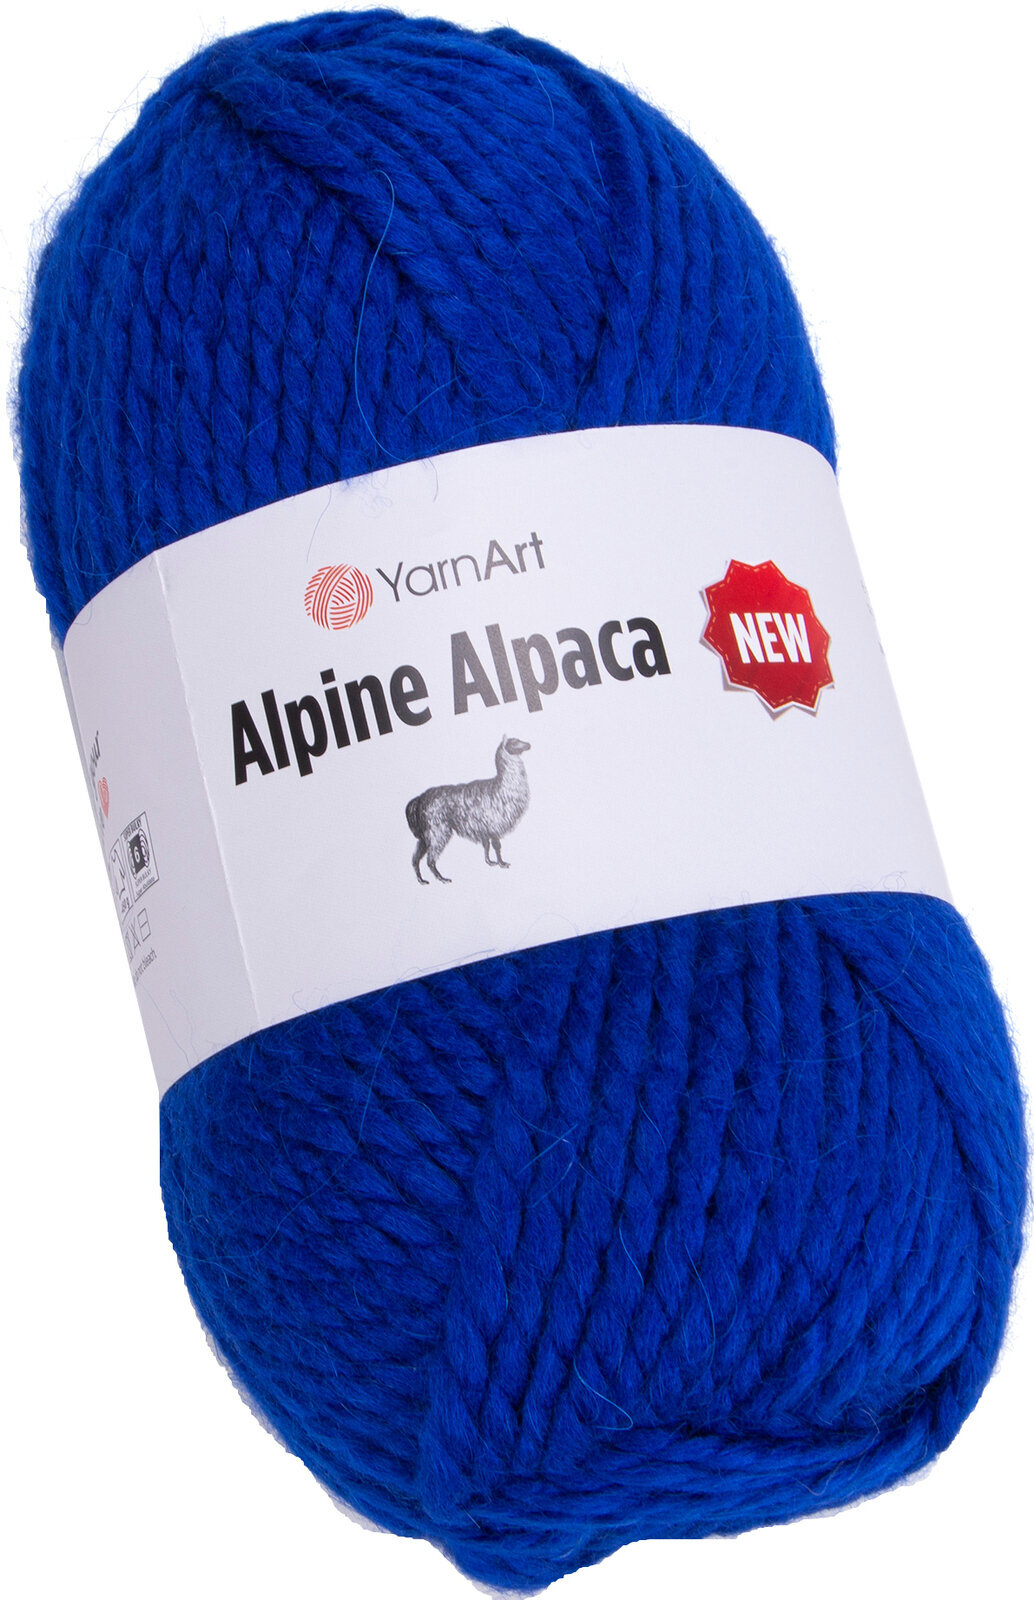 Knitting Yarn Yarn Art Alpine Alpaca New 1442